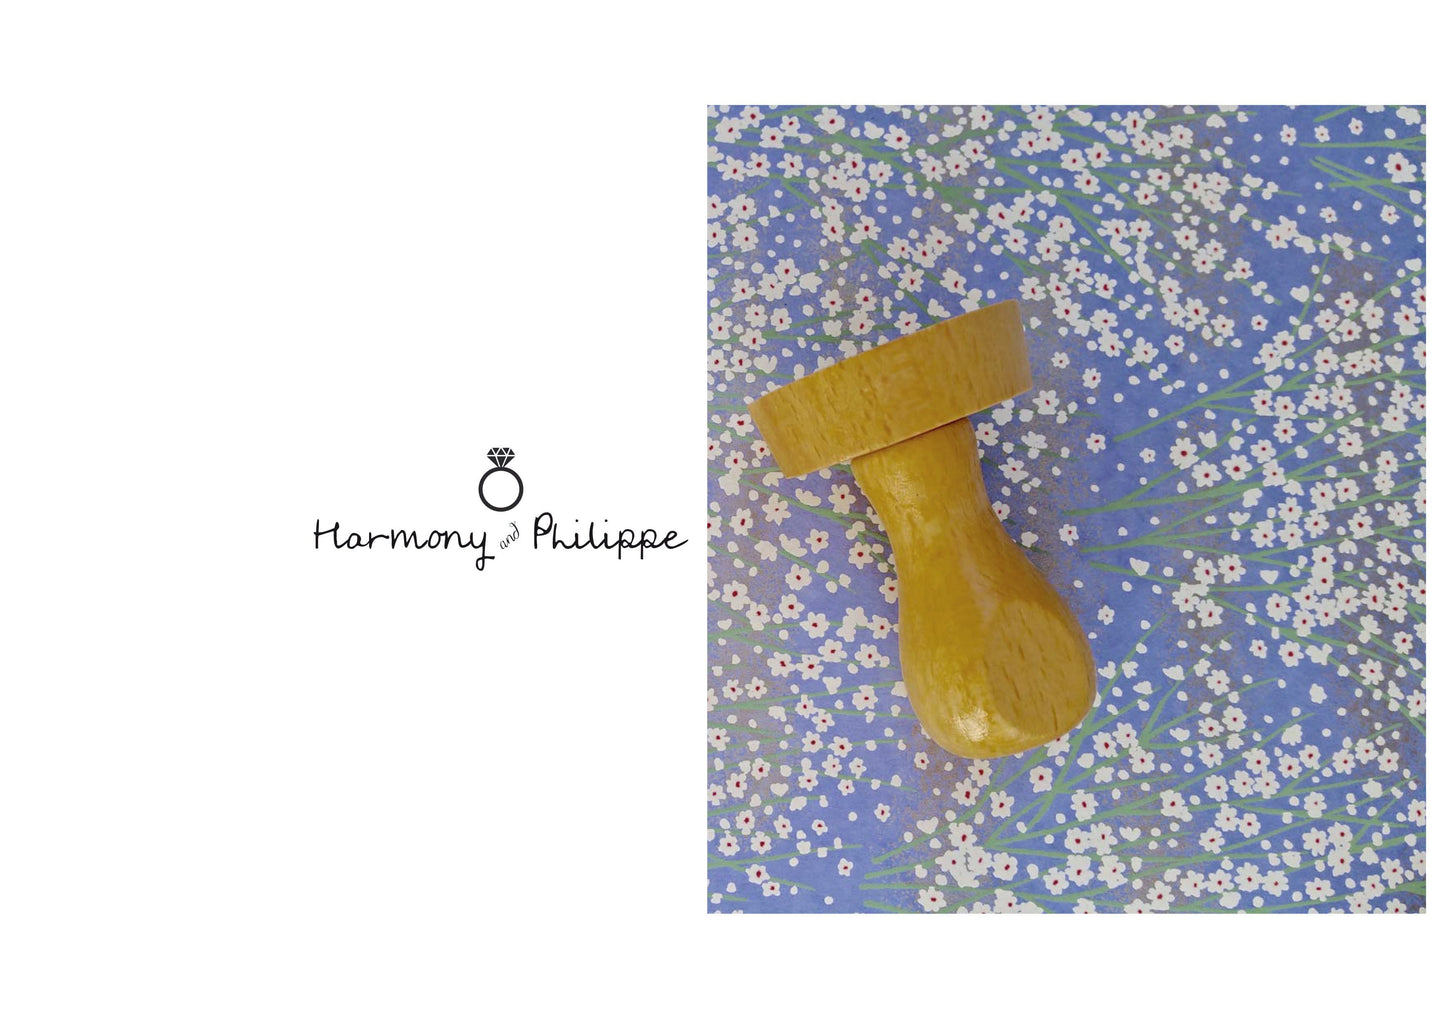 Tampon mariage Harmony & Philippe, tampon mariage logo personnalisable, tampon logo mariage sur mesure pour décorer vos papeteries de mariage